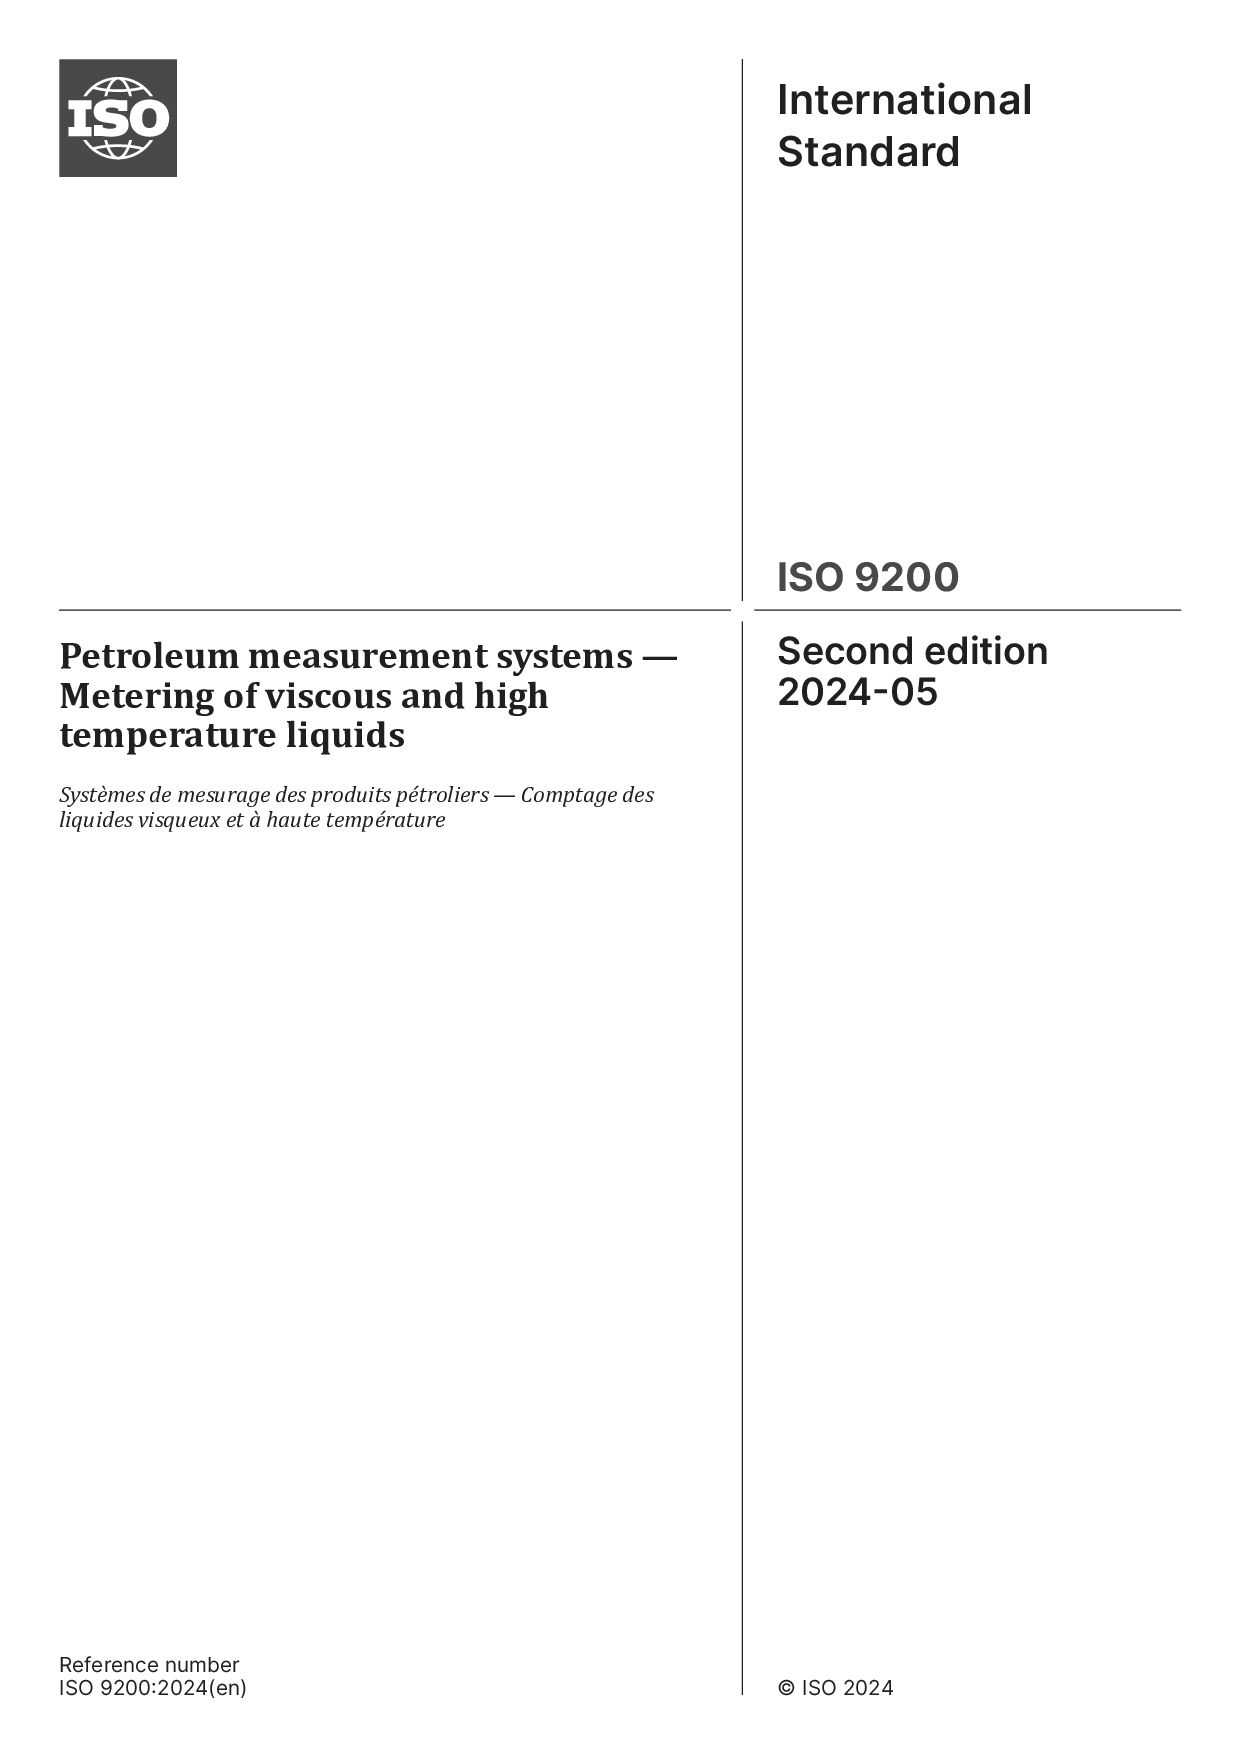 ISO 9200:2024封面图